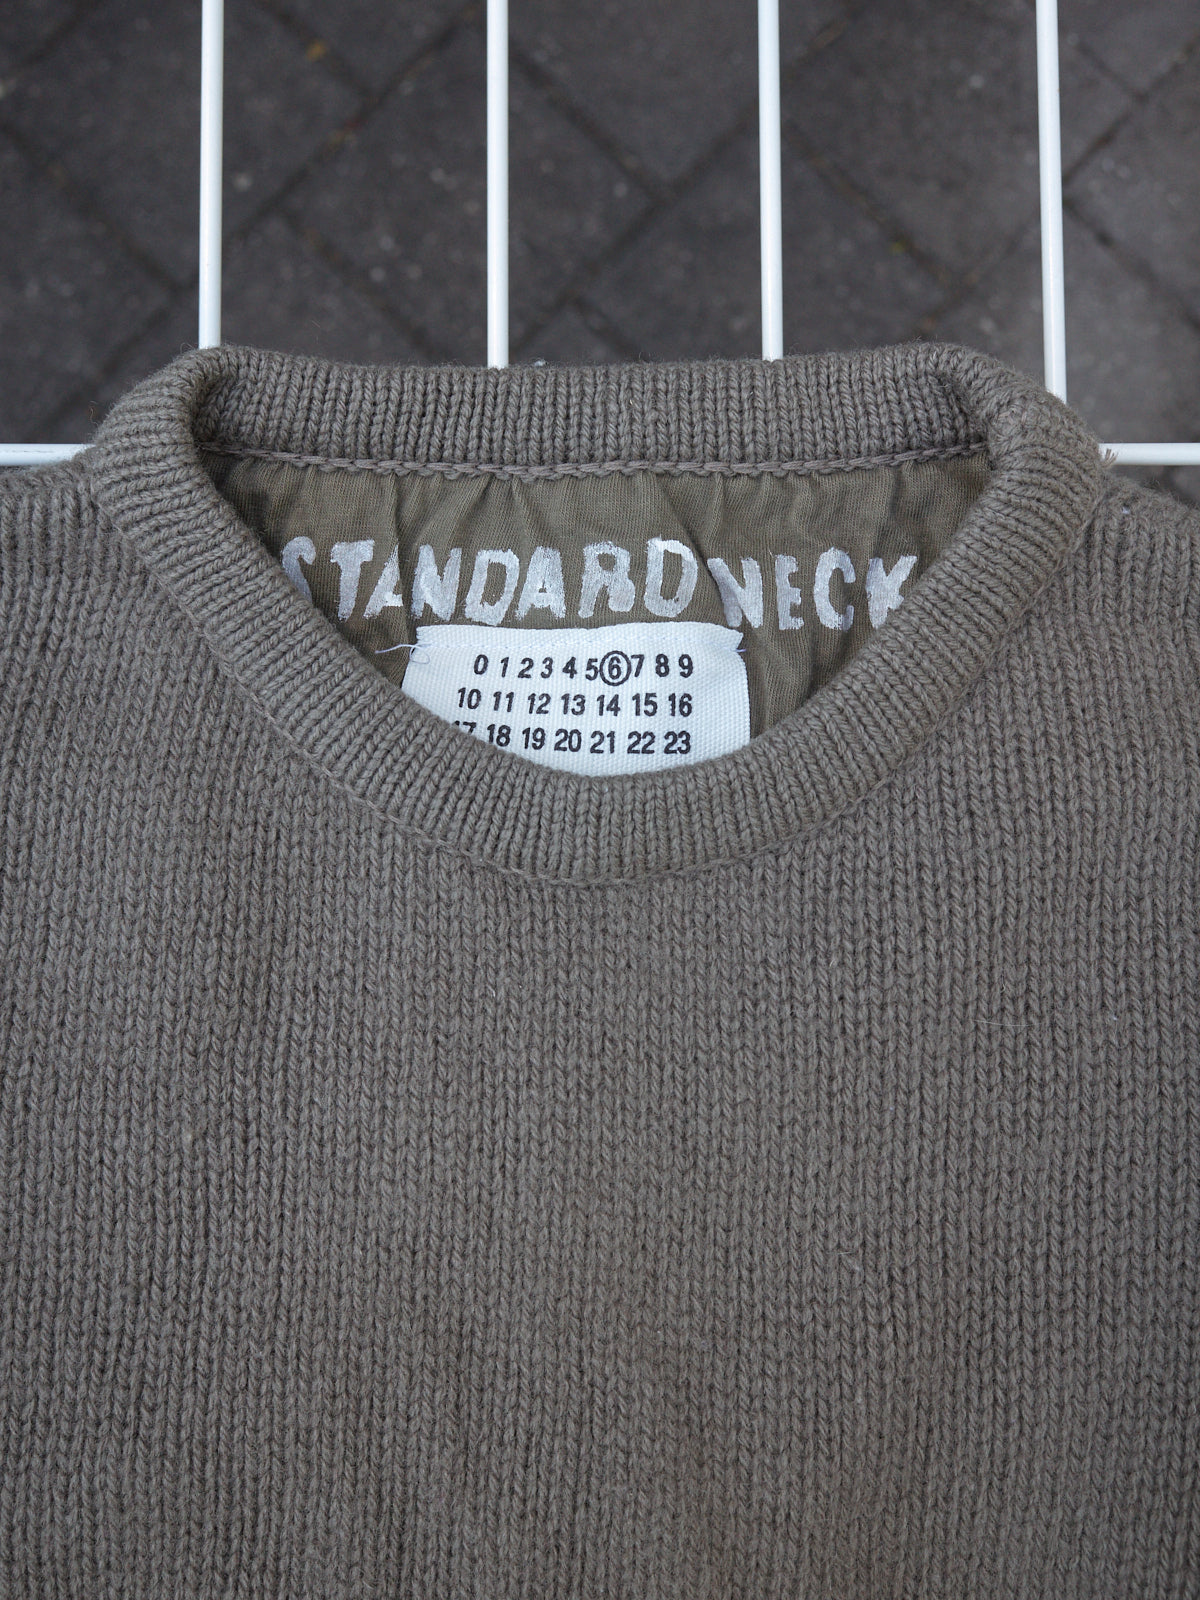 Maison Martin Margiela 6 1990s khaki wool "STANDARD NECK" zip jumper - size M S